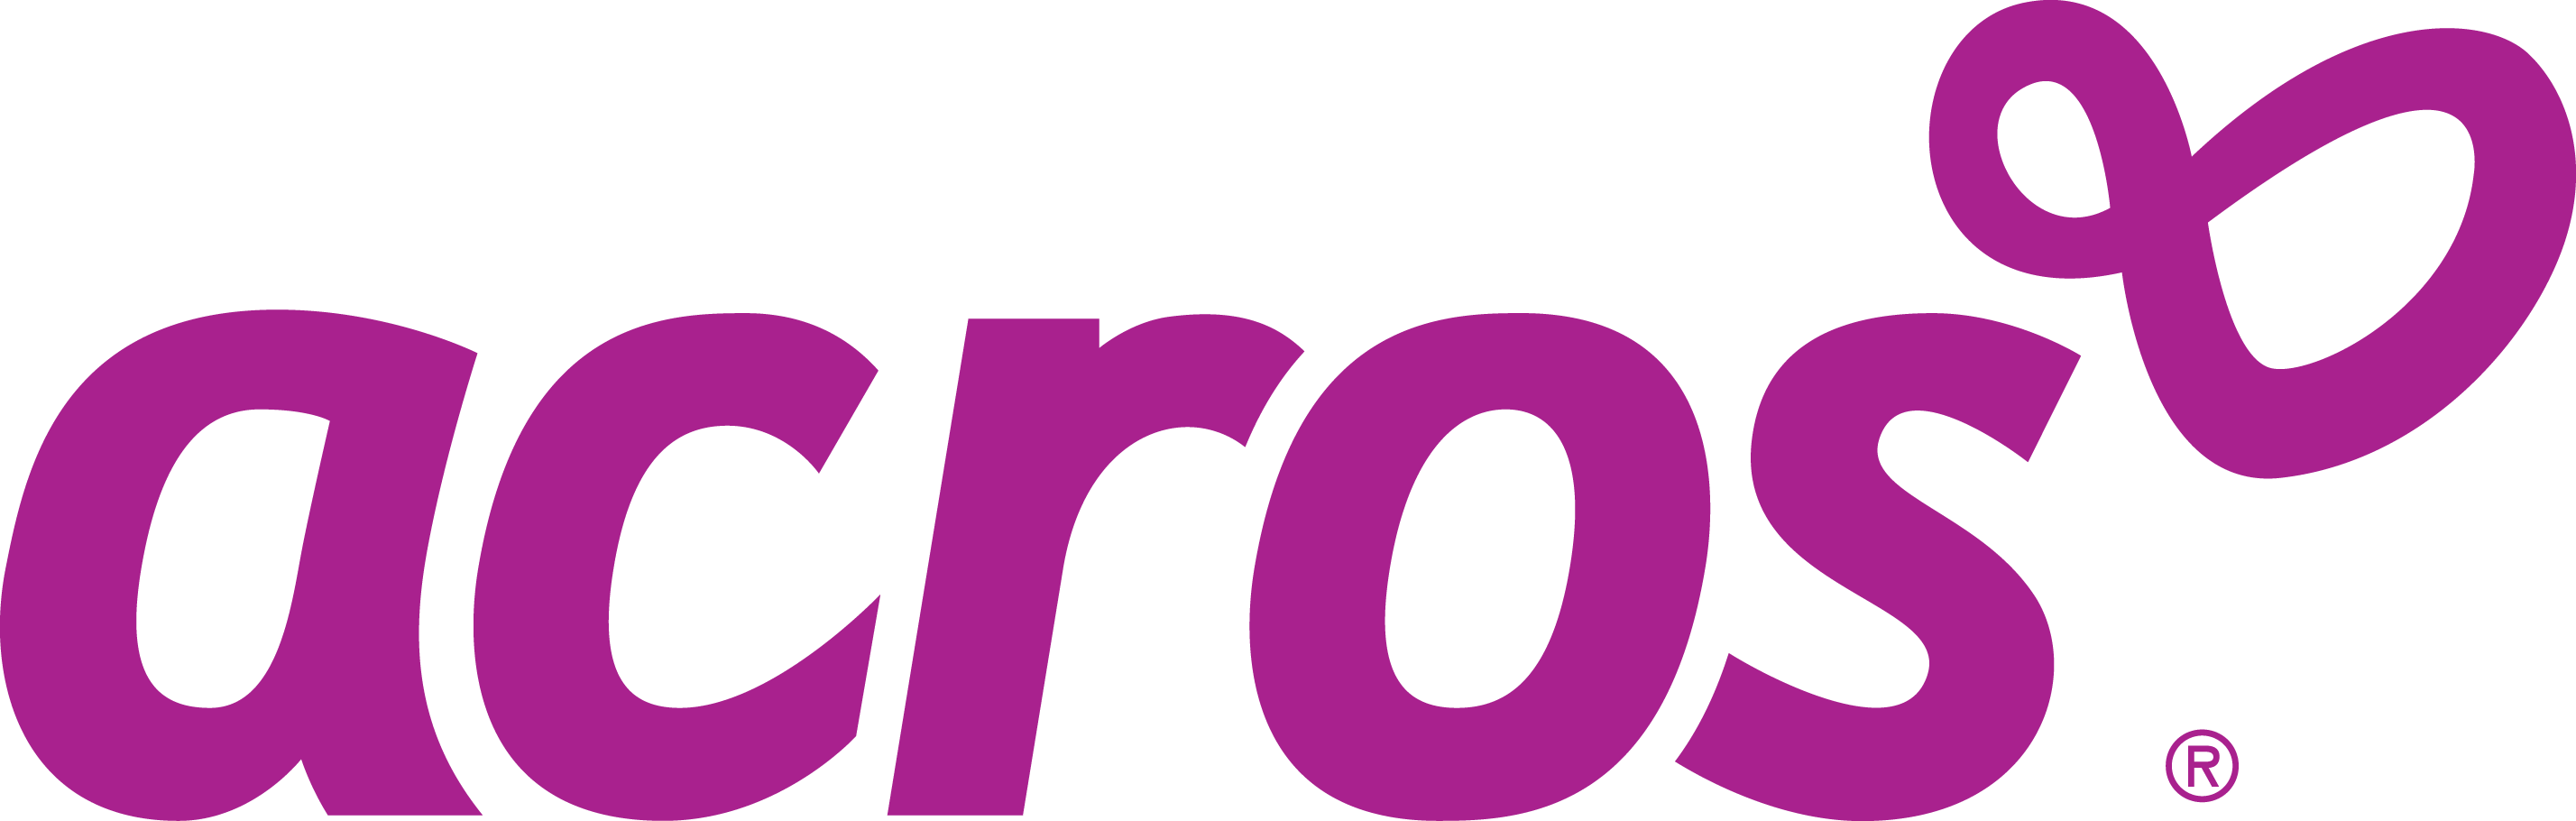 Wirpool Logo - Media Hub – Logos | Whirlpool Corporation